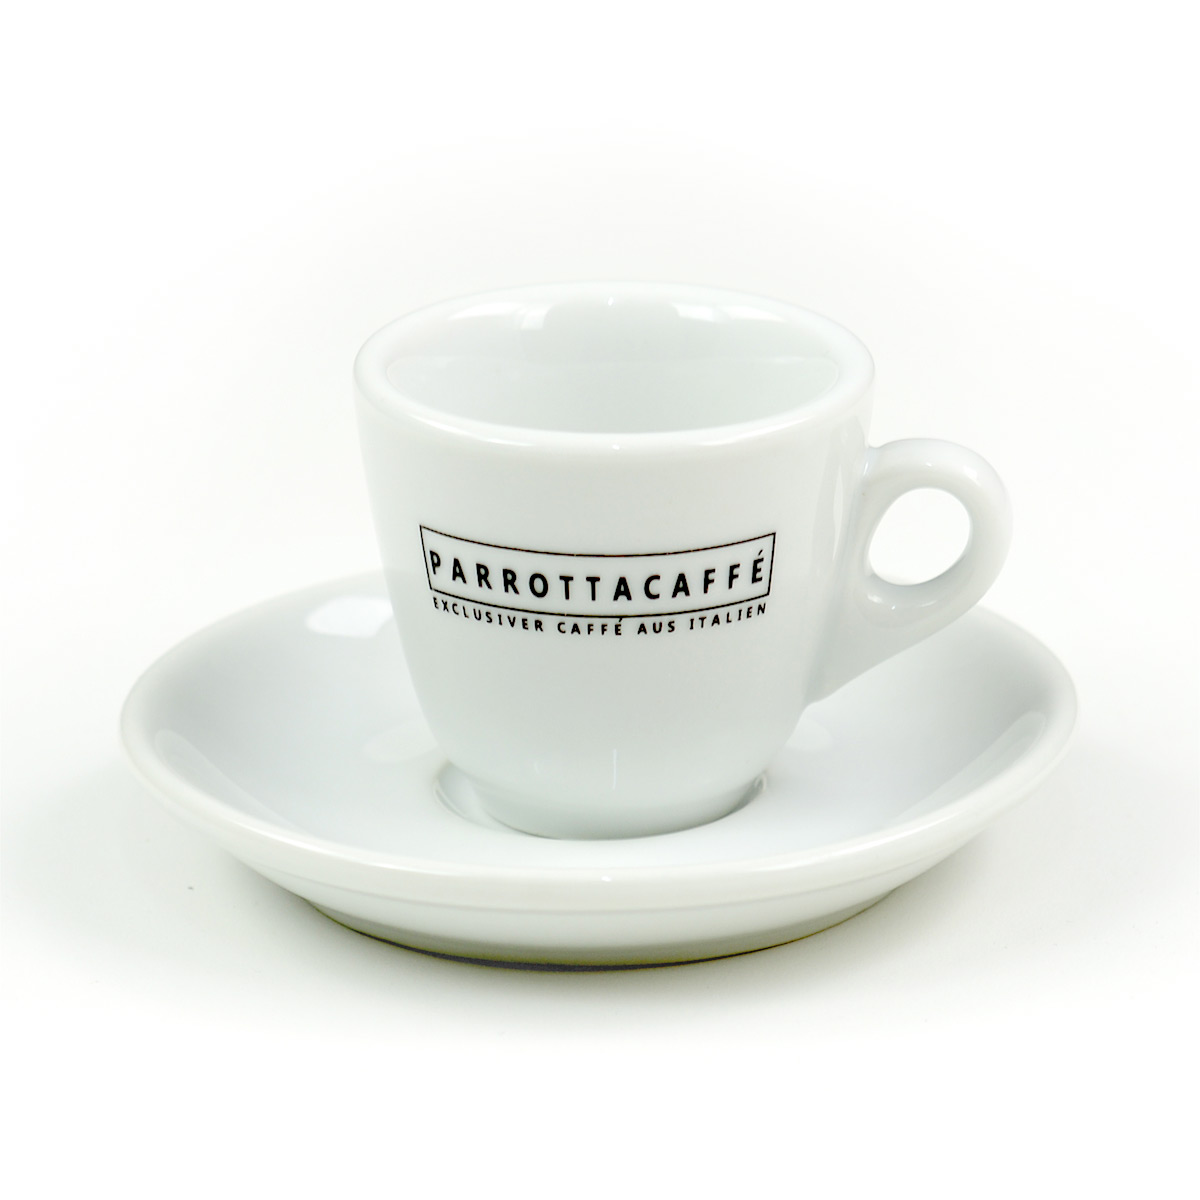 Parrottacaffe Espressotassen